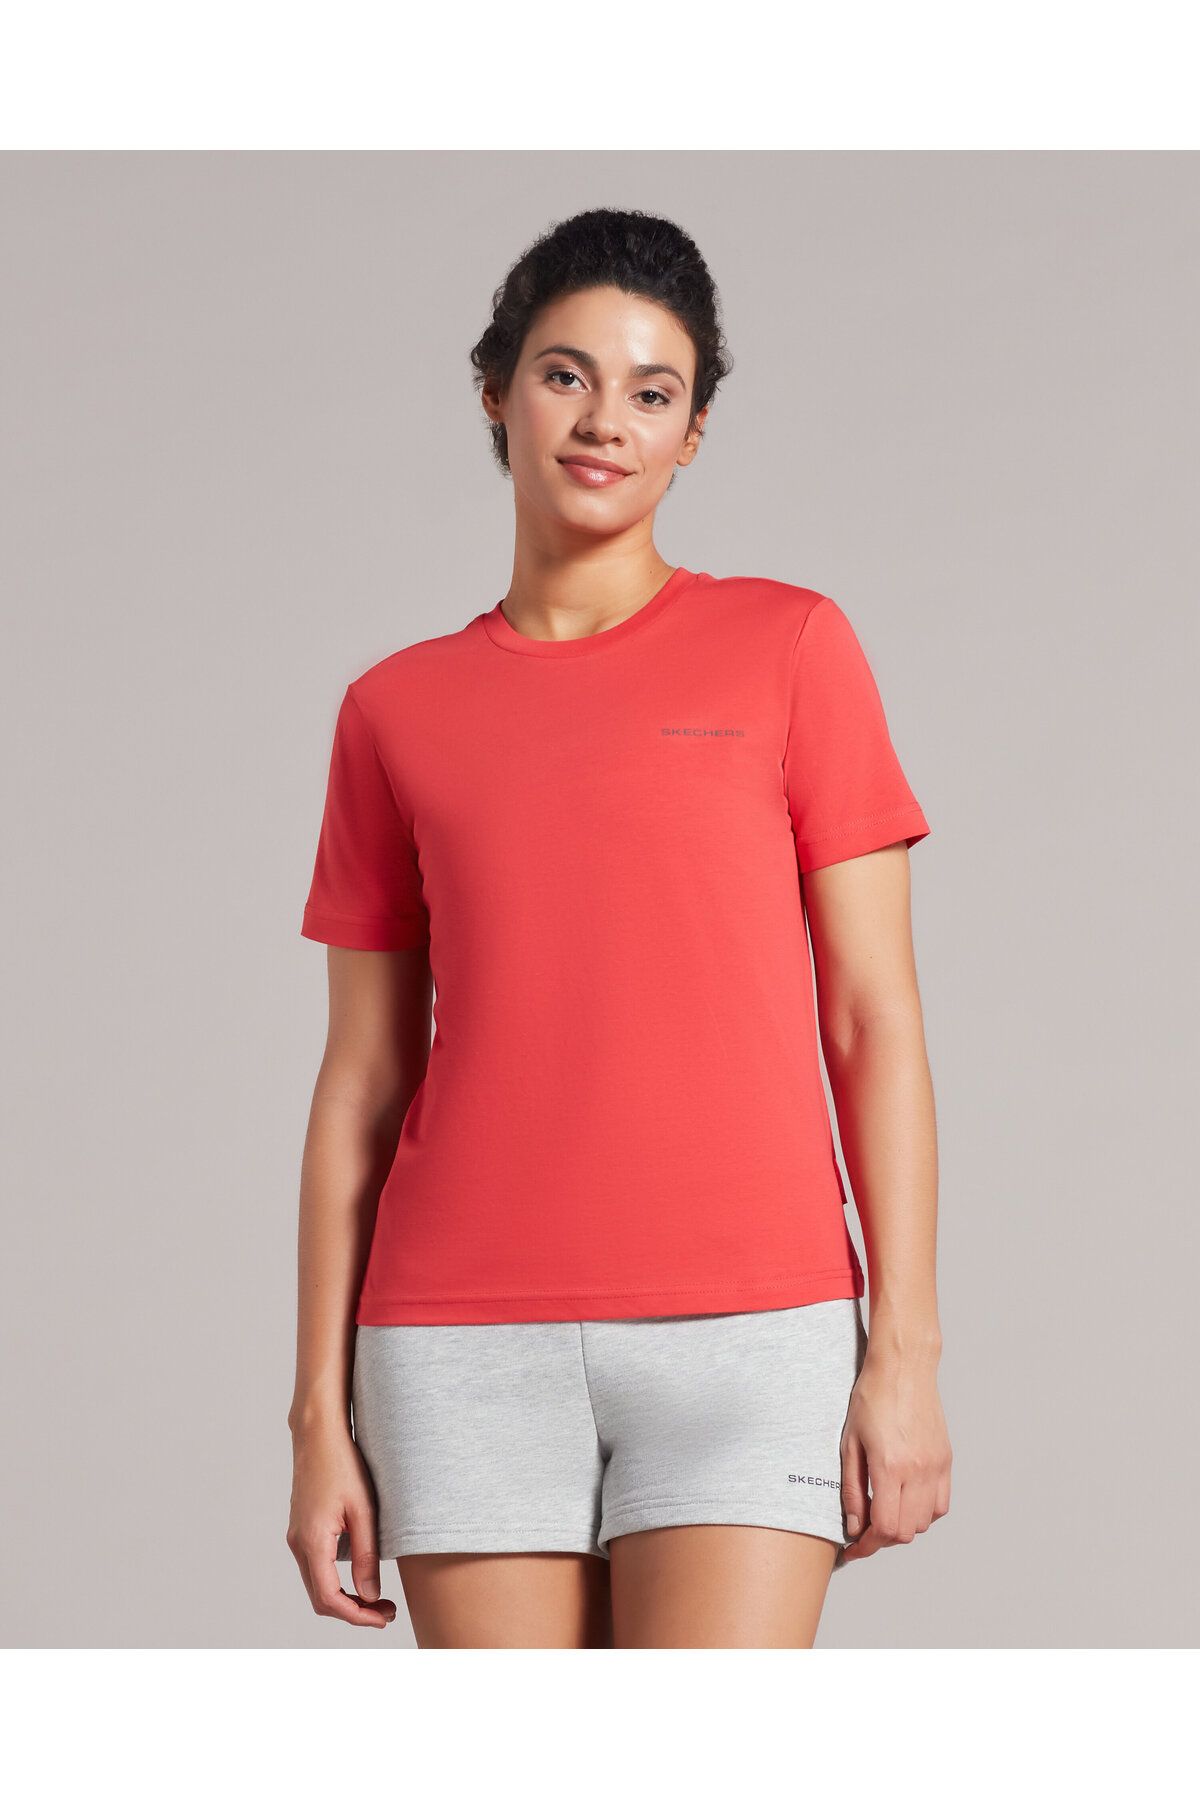 Skechers W New Basics Crew Neck T-shirt Kadın Kırmızı Tshirt S212178-600